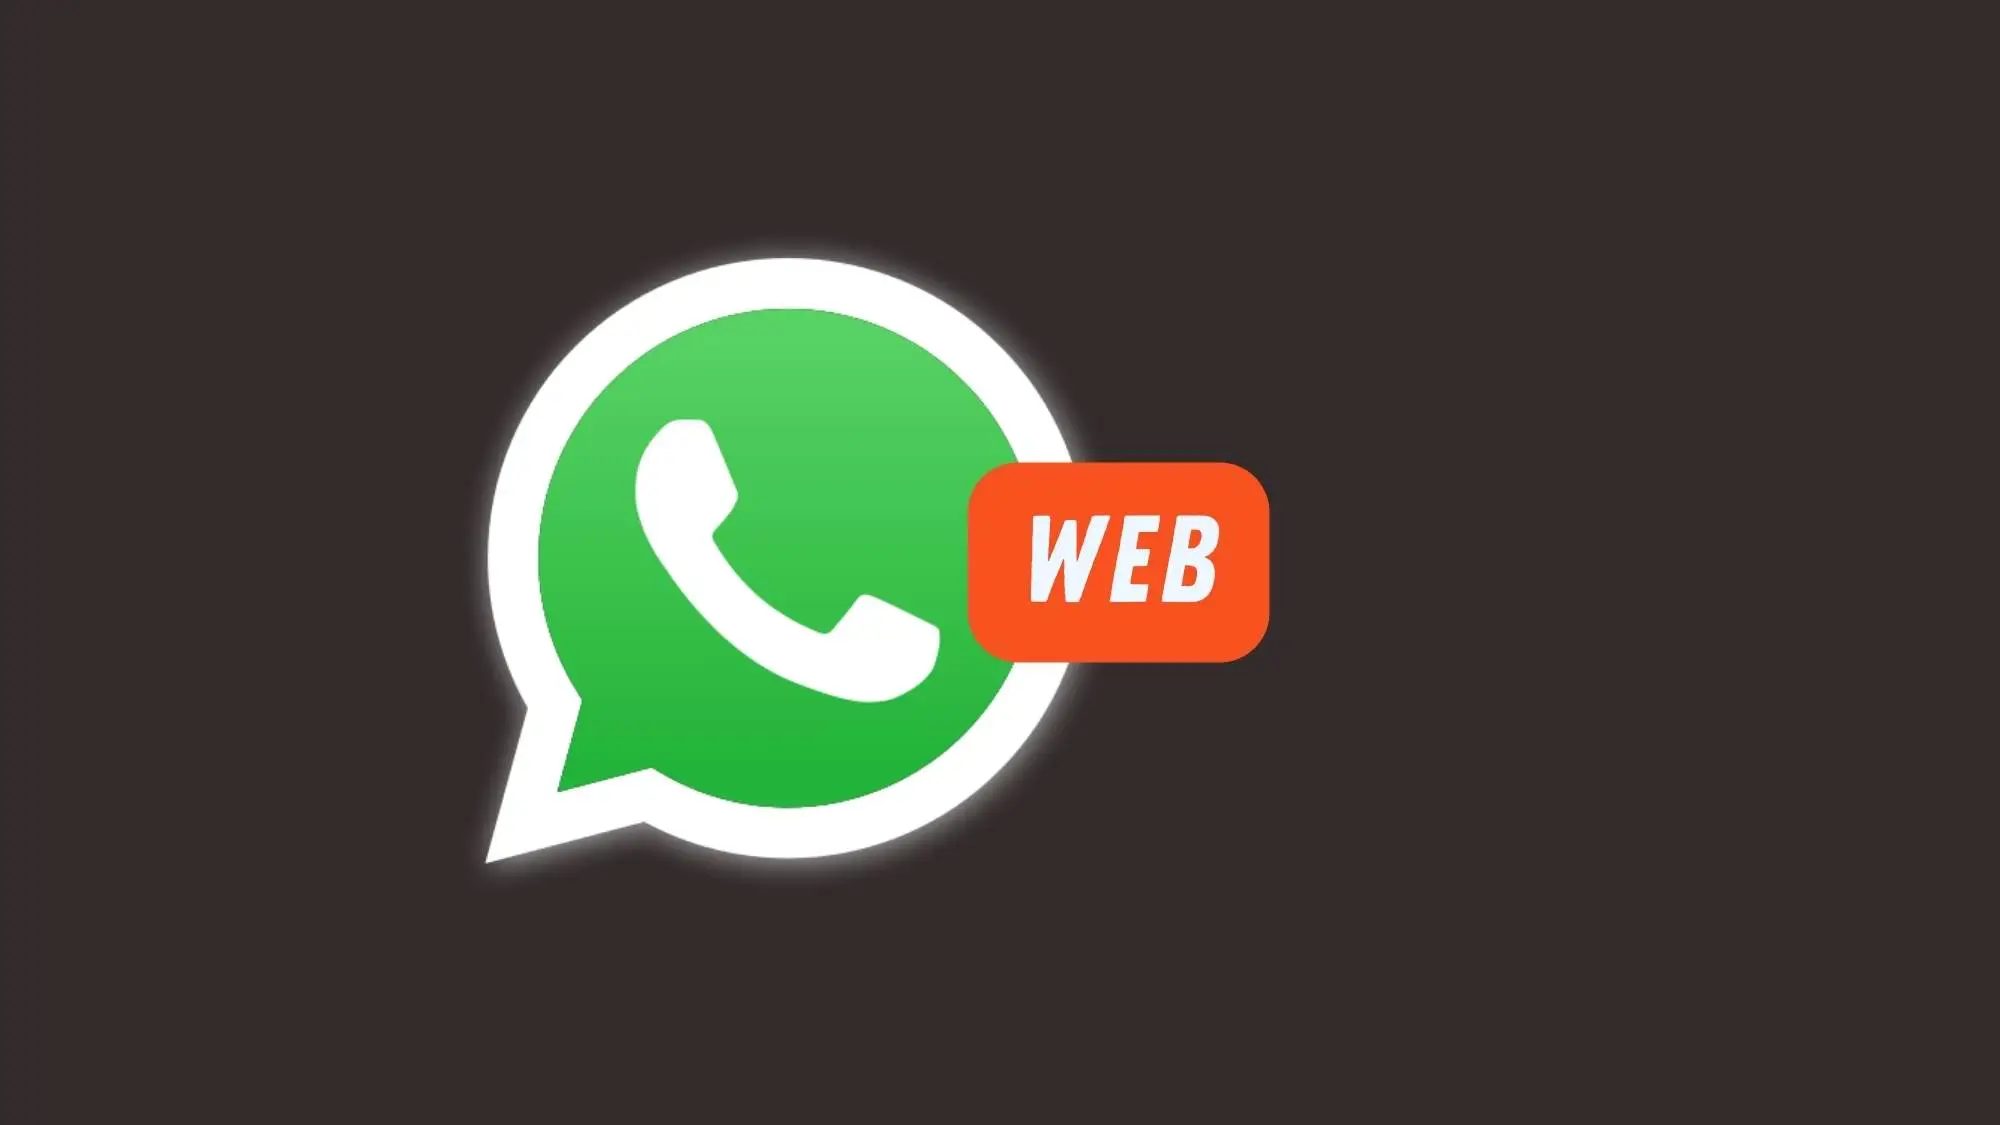 Csh, whatsapp, crescent, message, Web browser, cdr, svg, media, logos,  black | Anyrgb